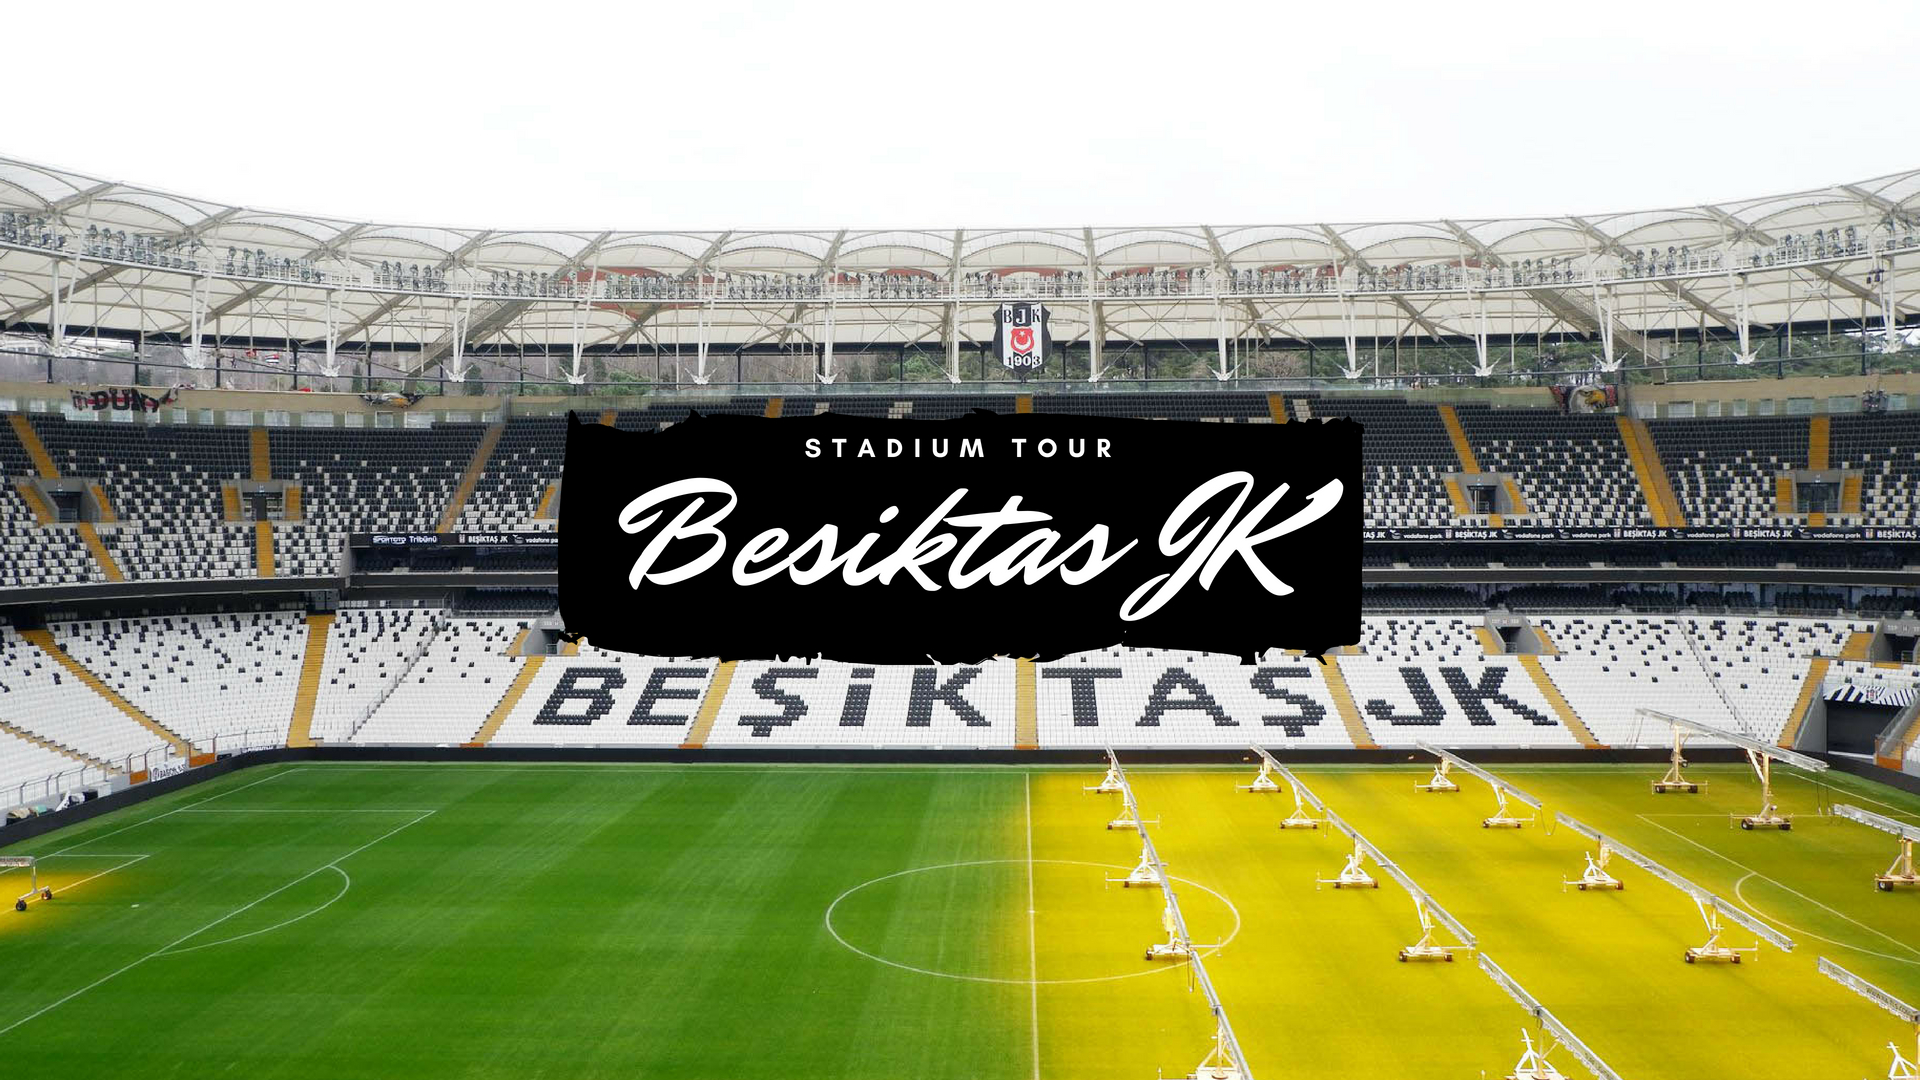 BJK Stadium Tour